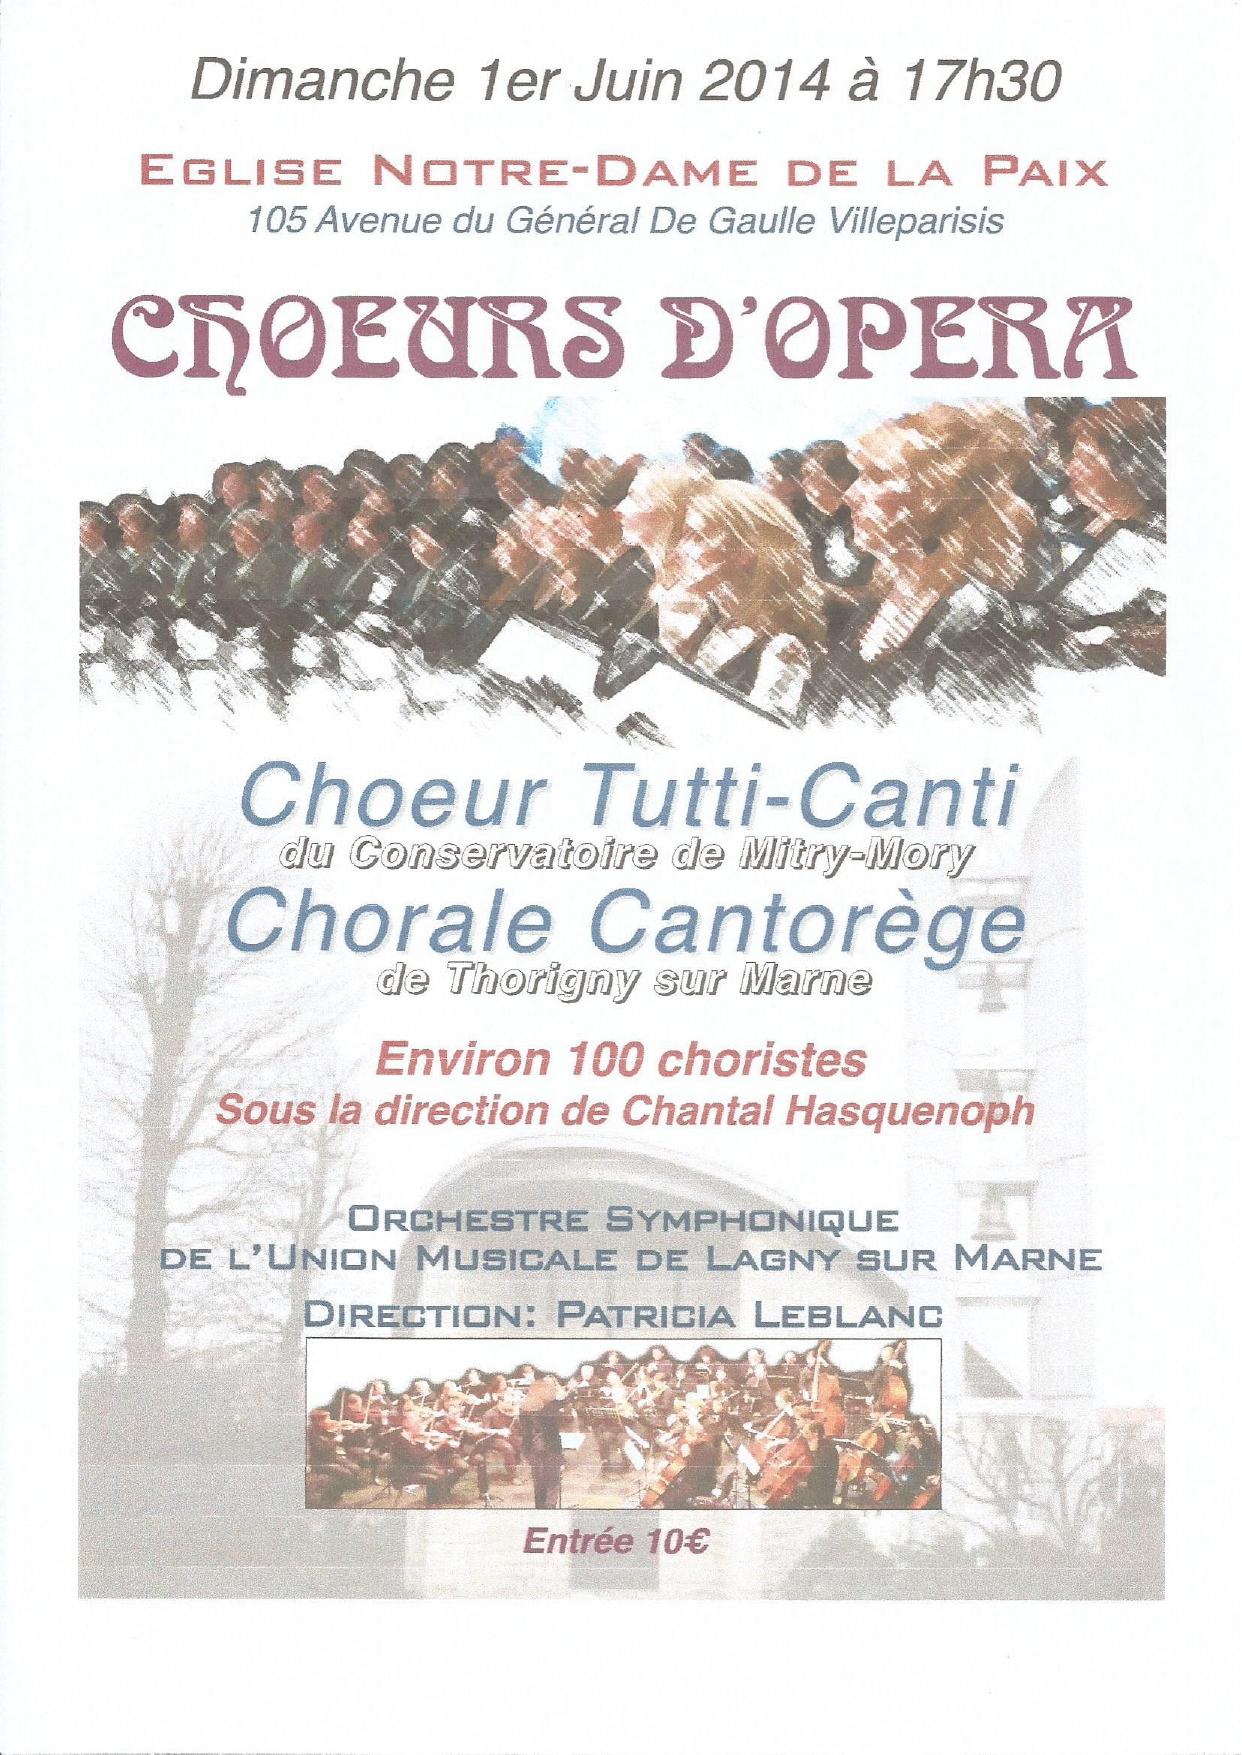 2014 - juin - Villeparisis - chœurs opéra